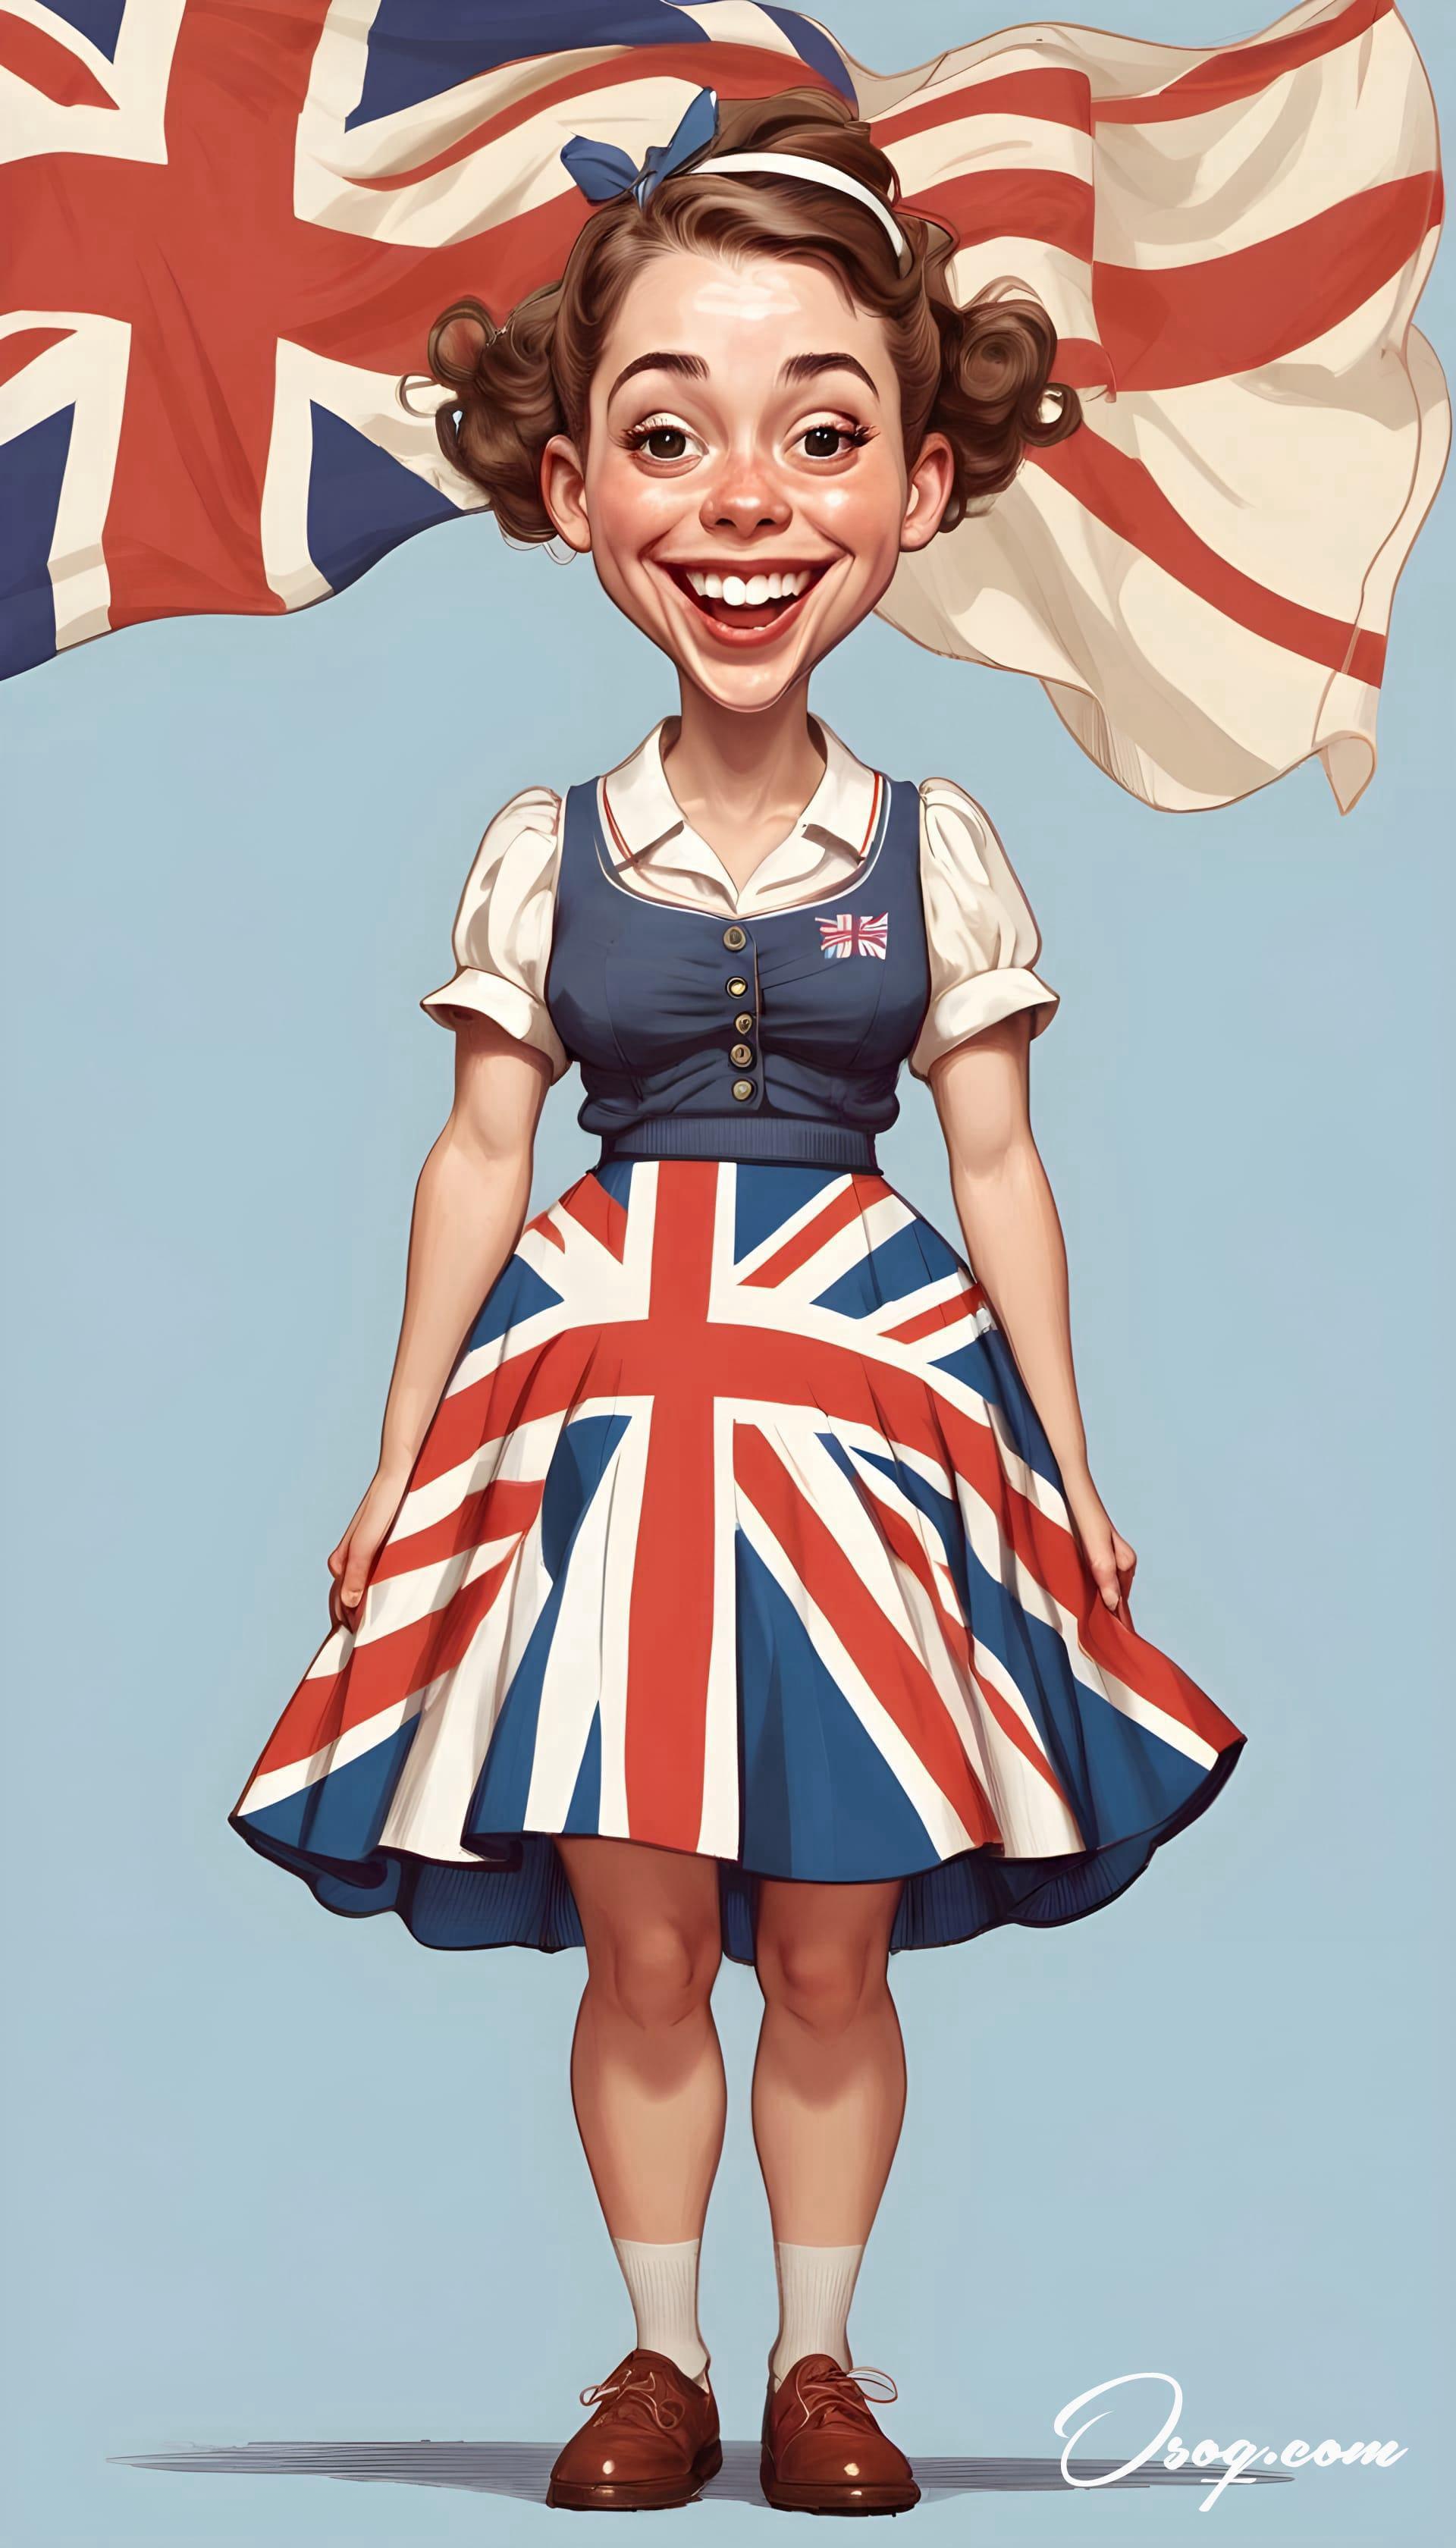 Britain cartoon 17